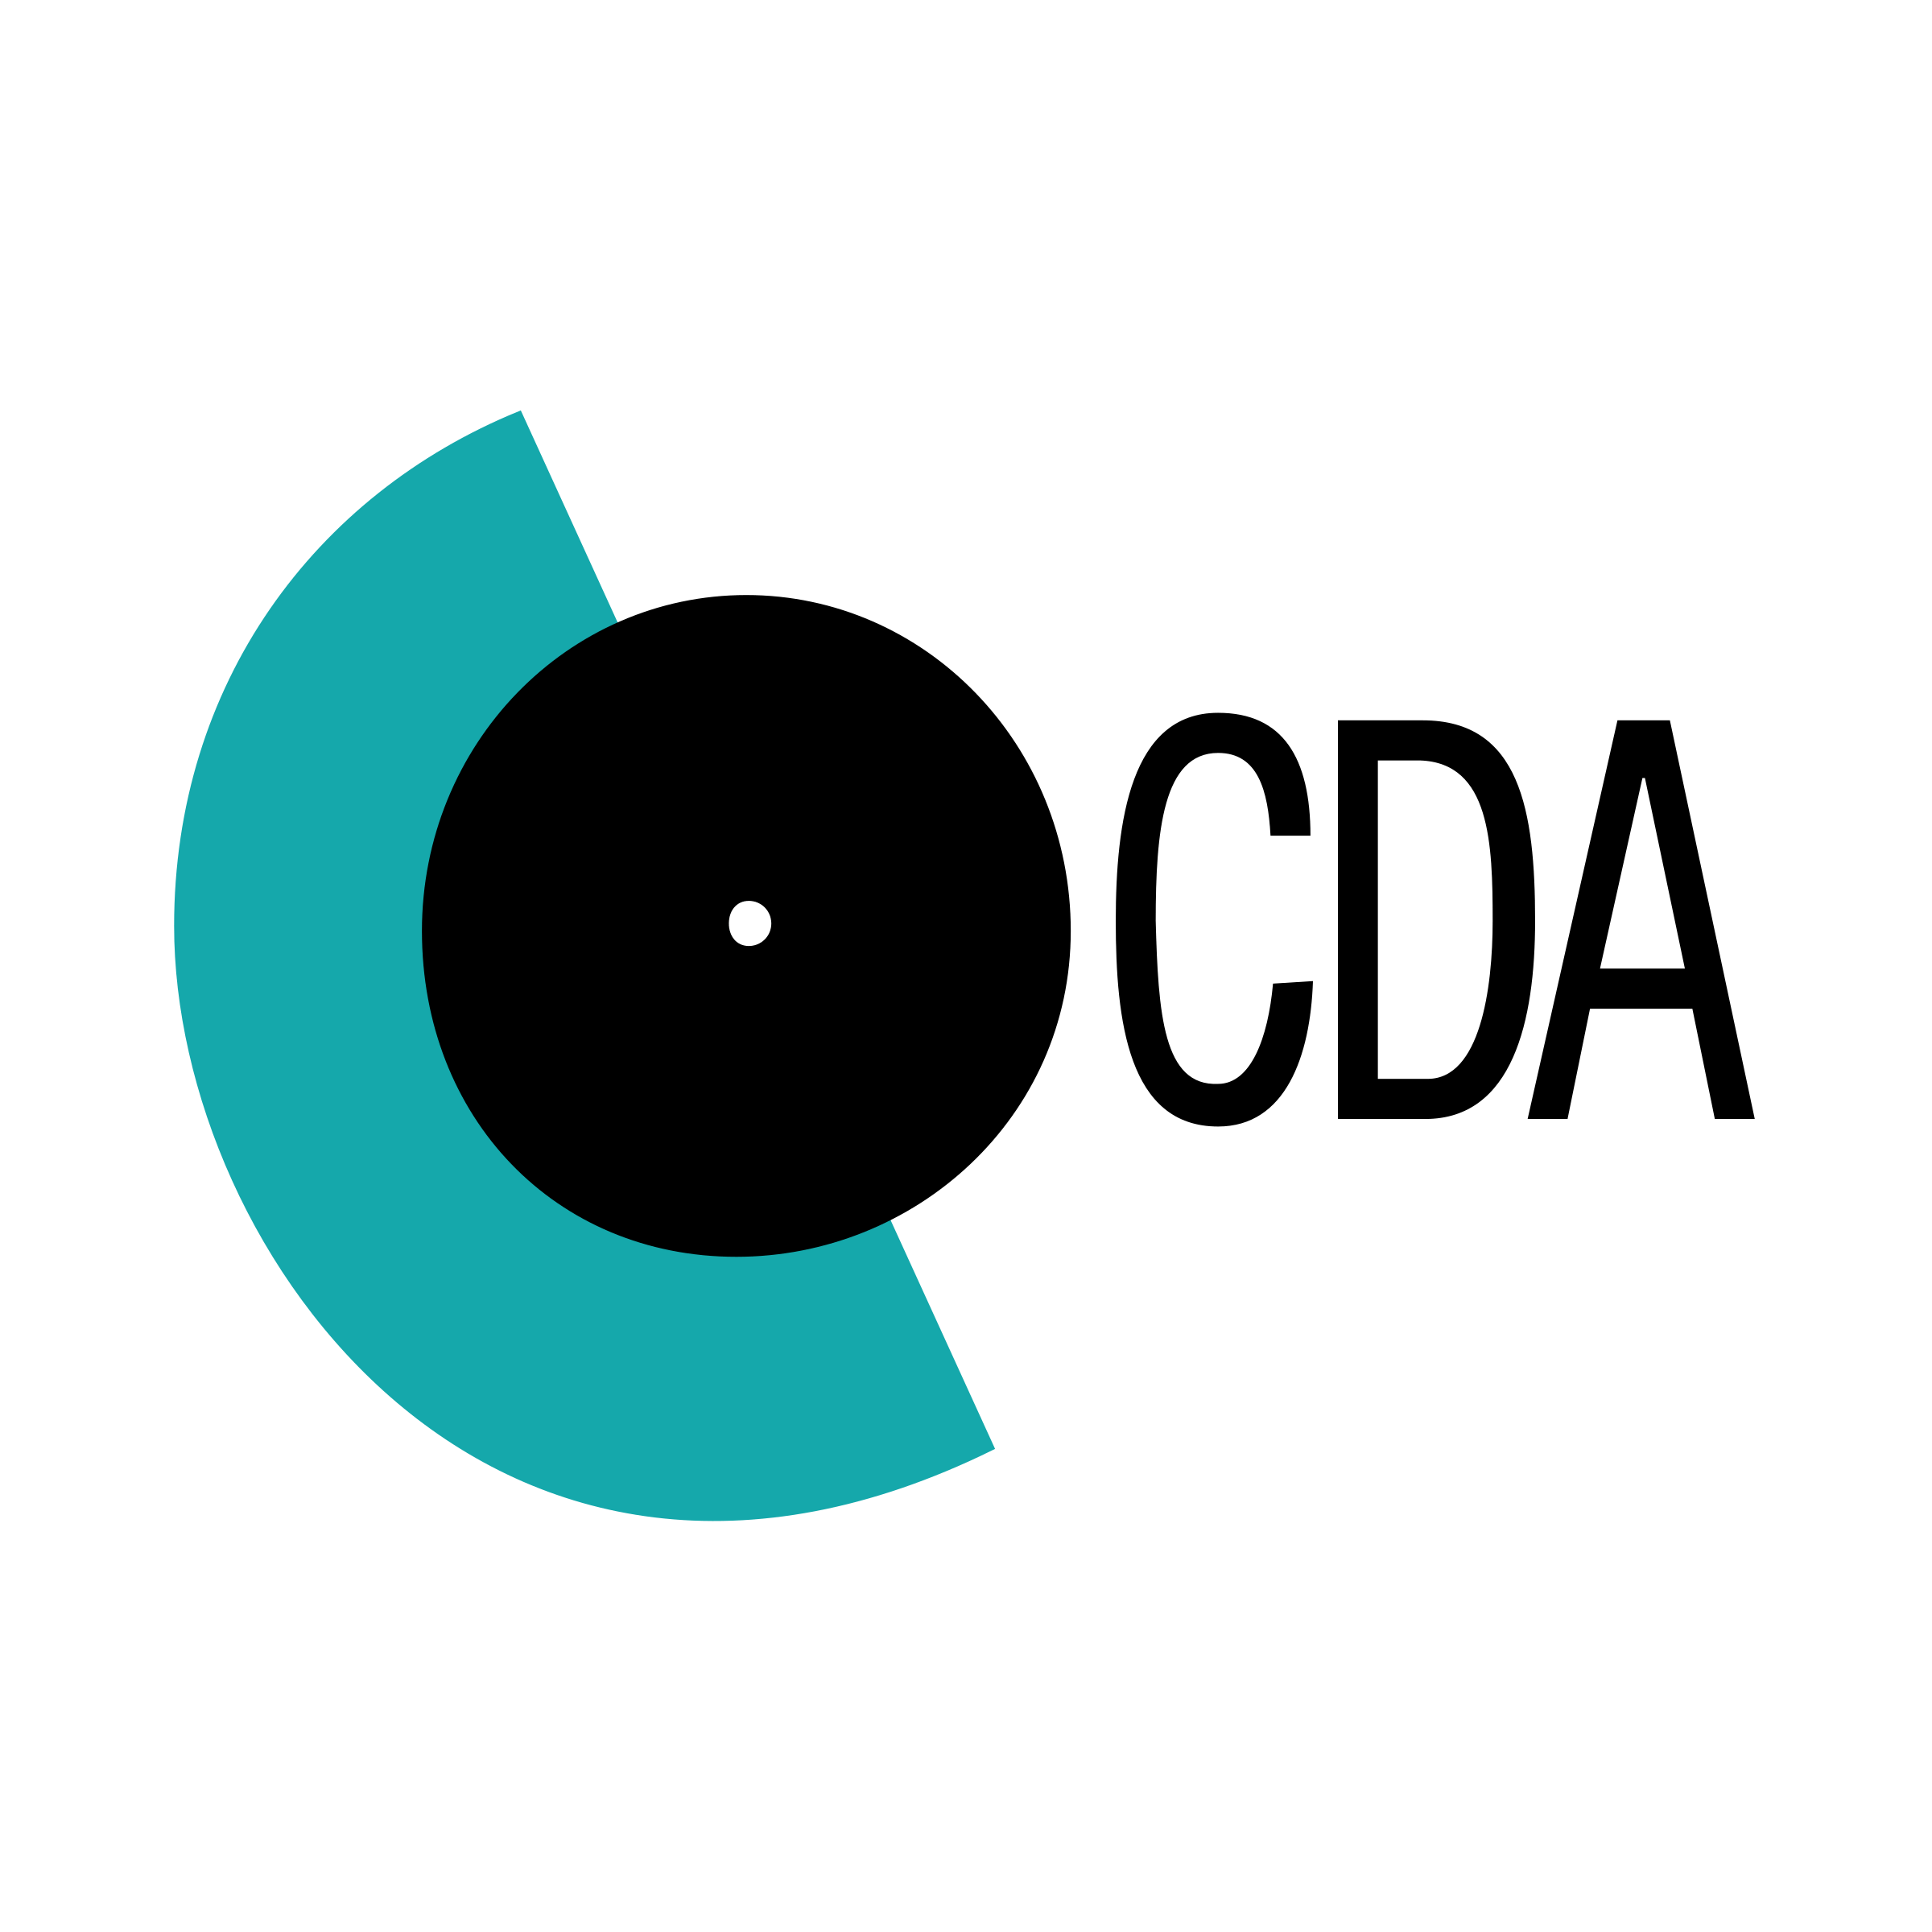 CDA Logo - CDA Logo PNG Transparent & SVG Vector